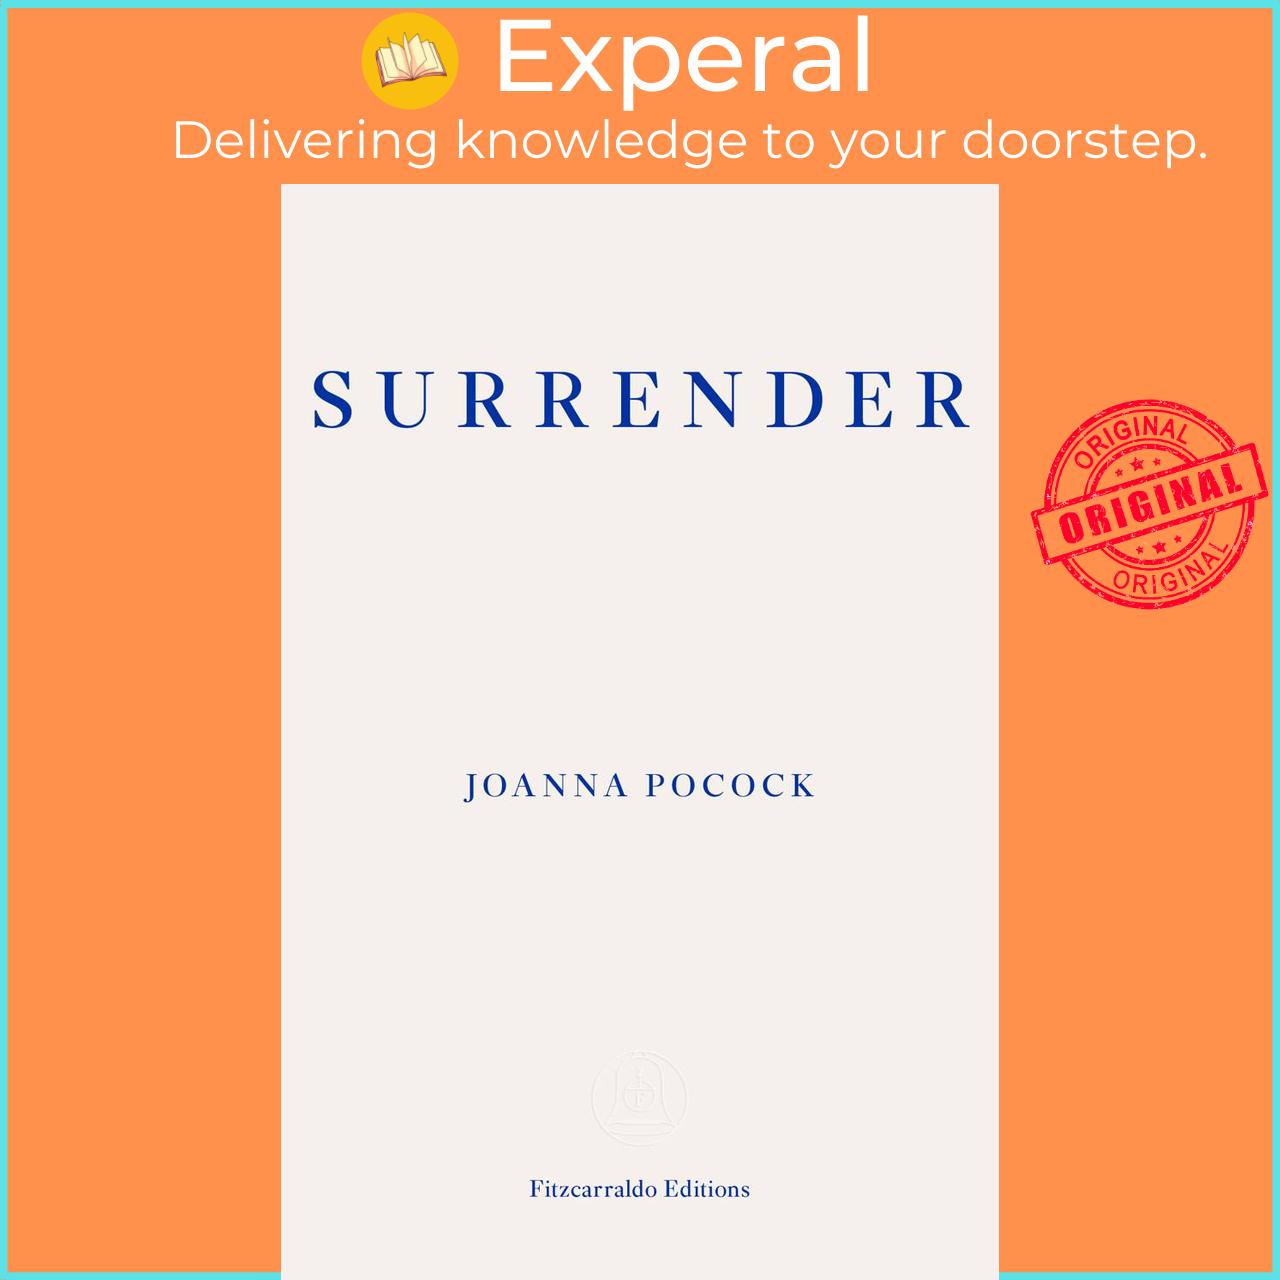 Sách - Surrender by Joanna Pocock (UK edition, paperback)